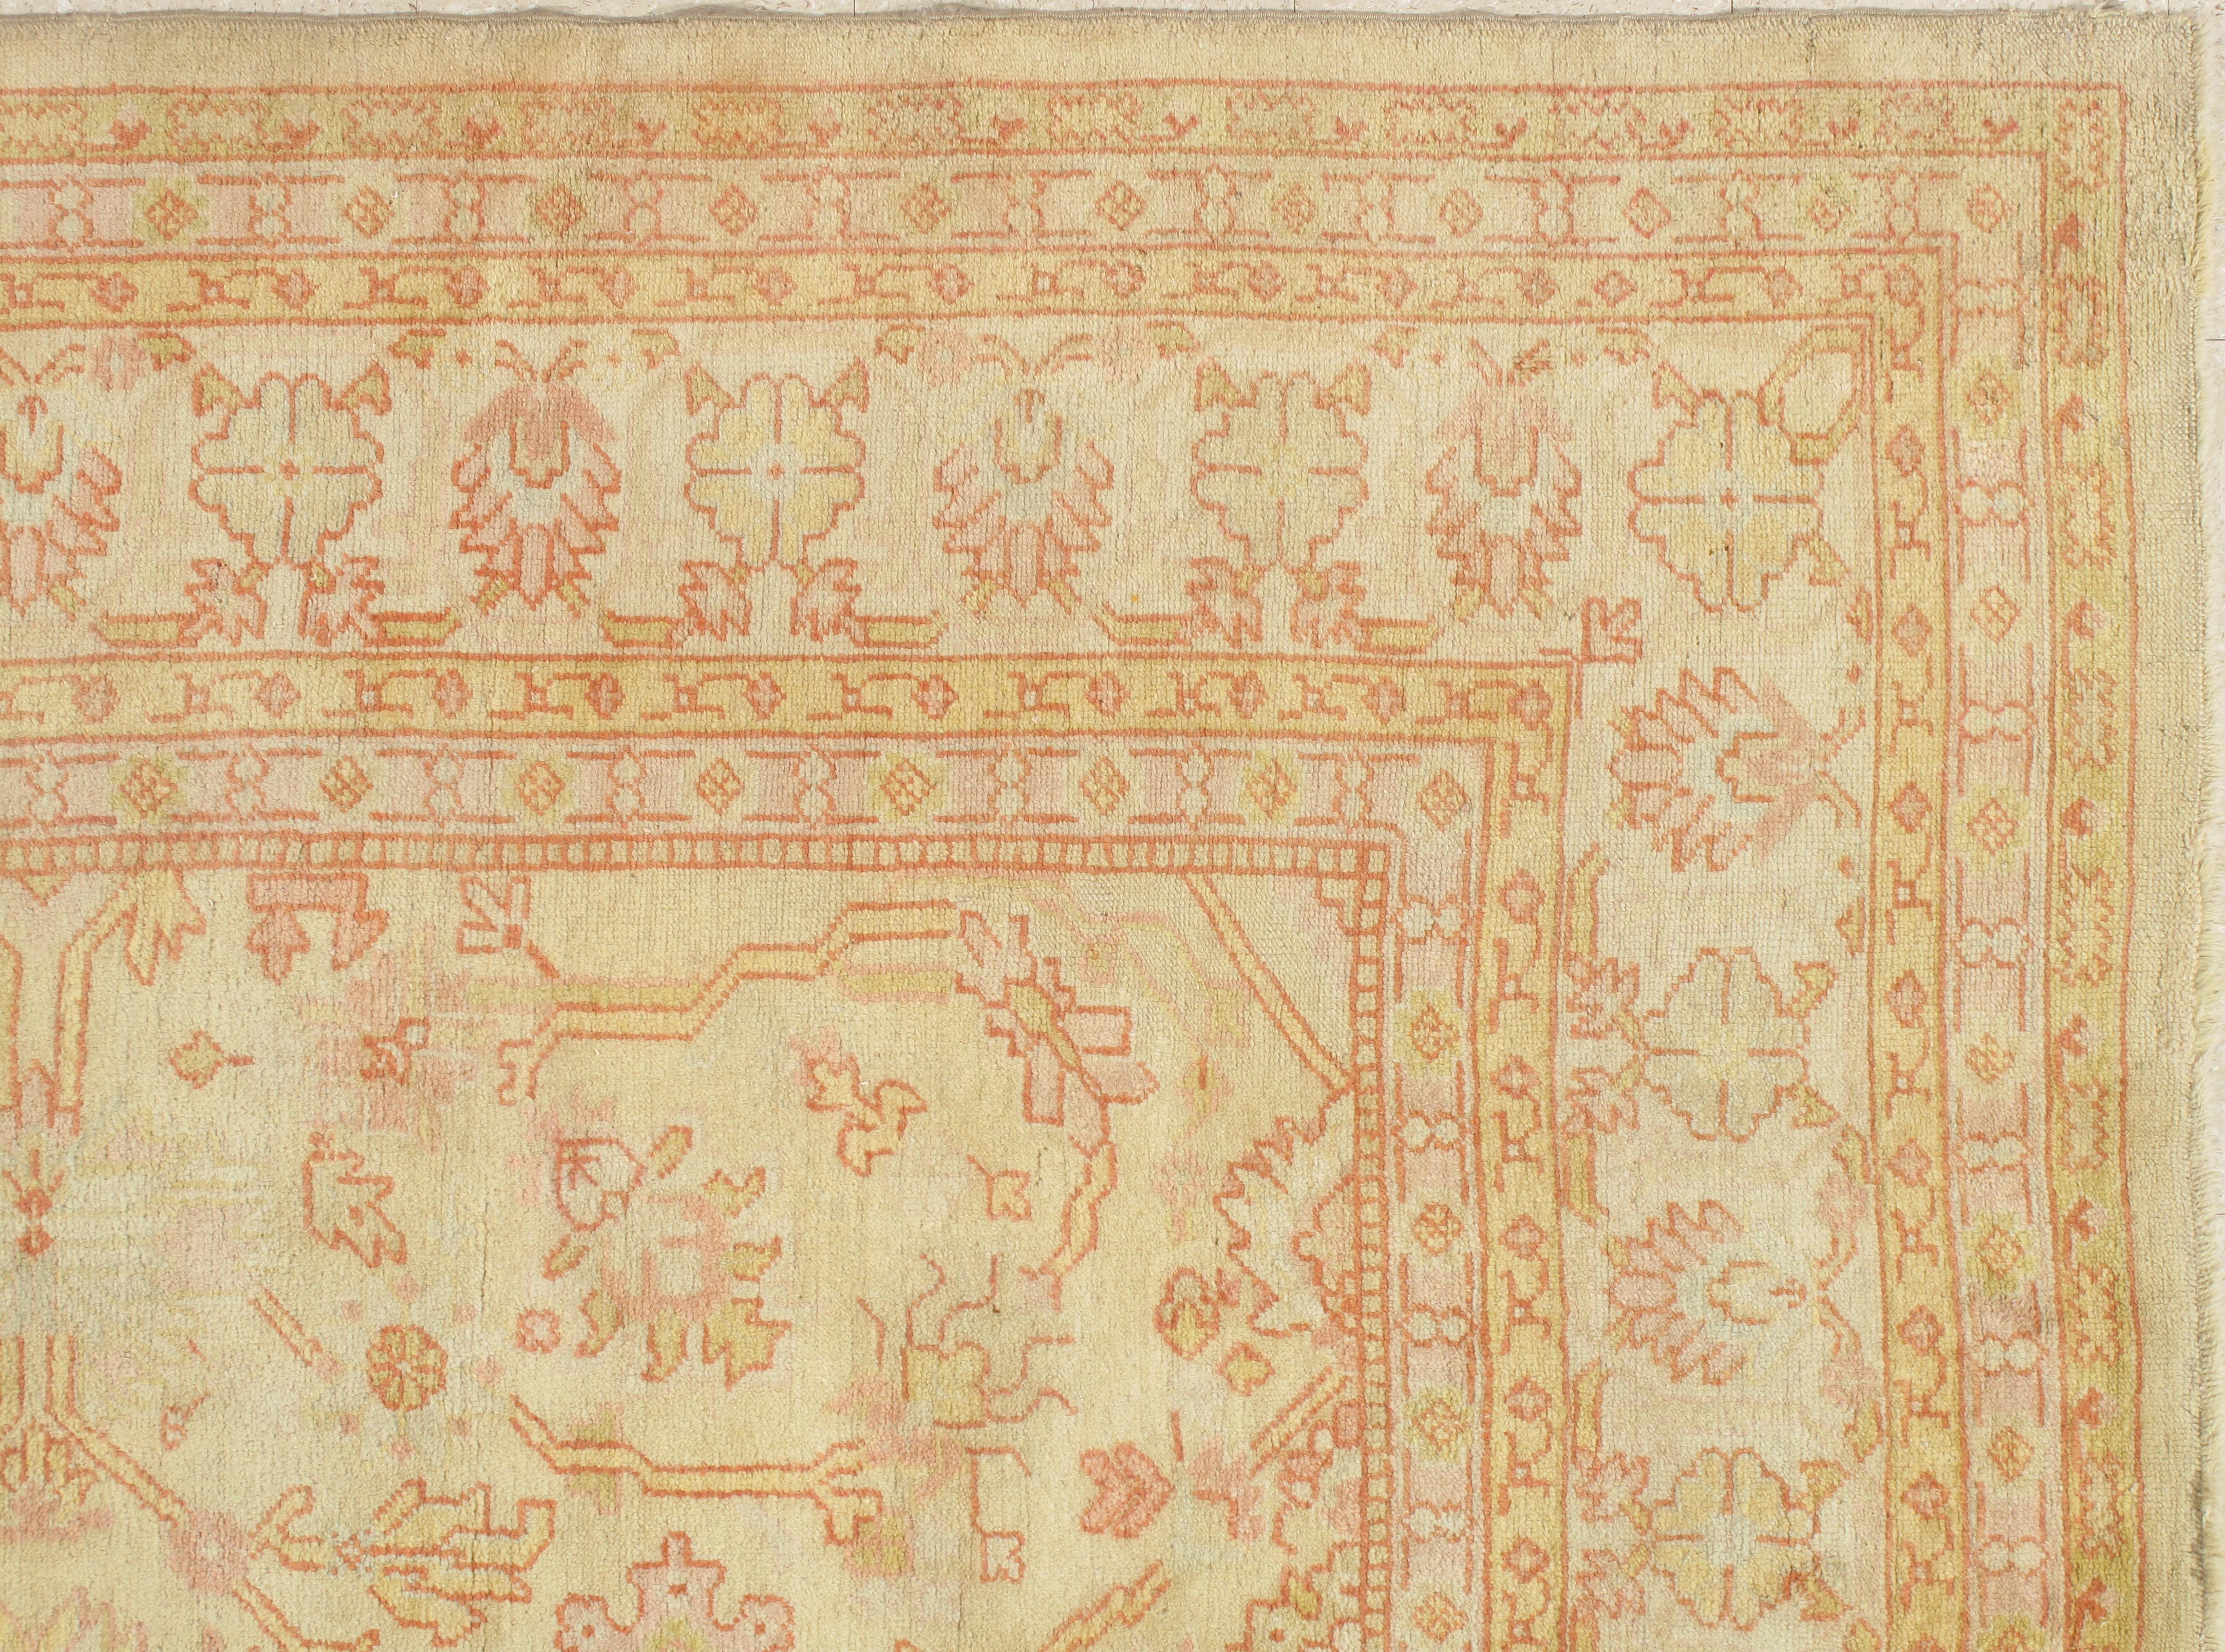 Antique Turkish Oushak Carpet, Handmade Oriental Rug, Beige, Taupe, Sage, Coral For Sale 3